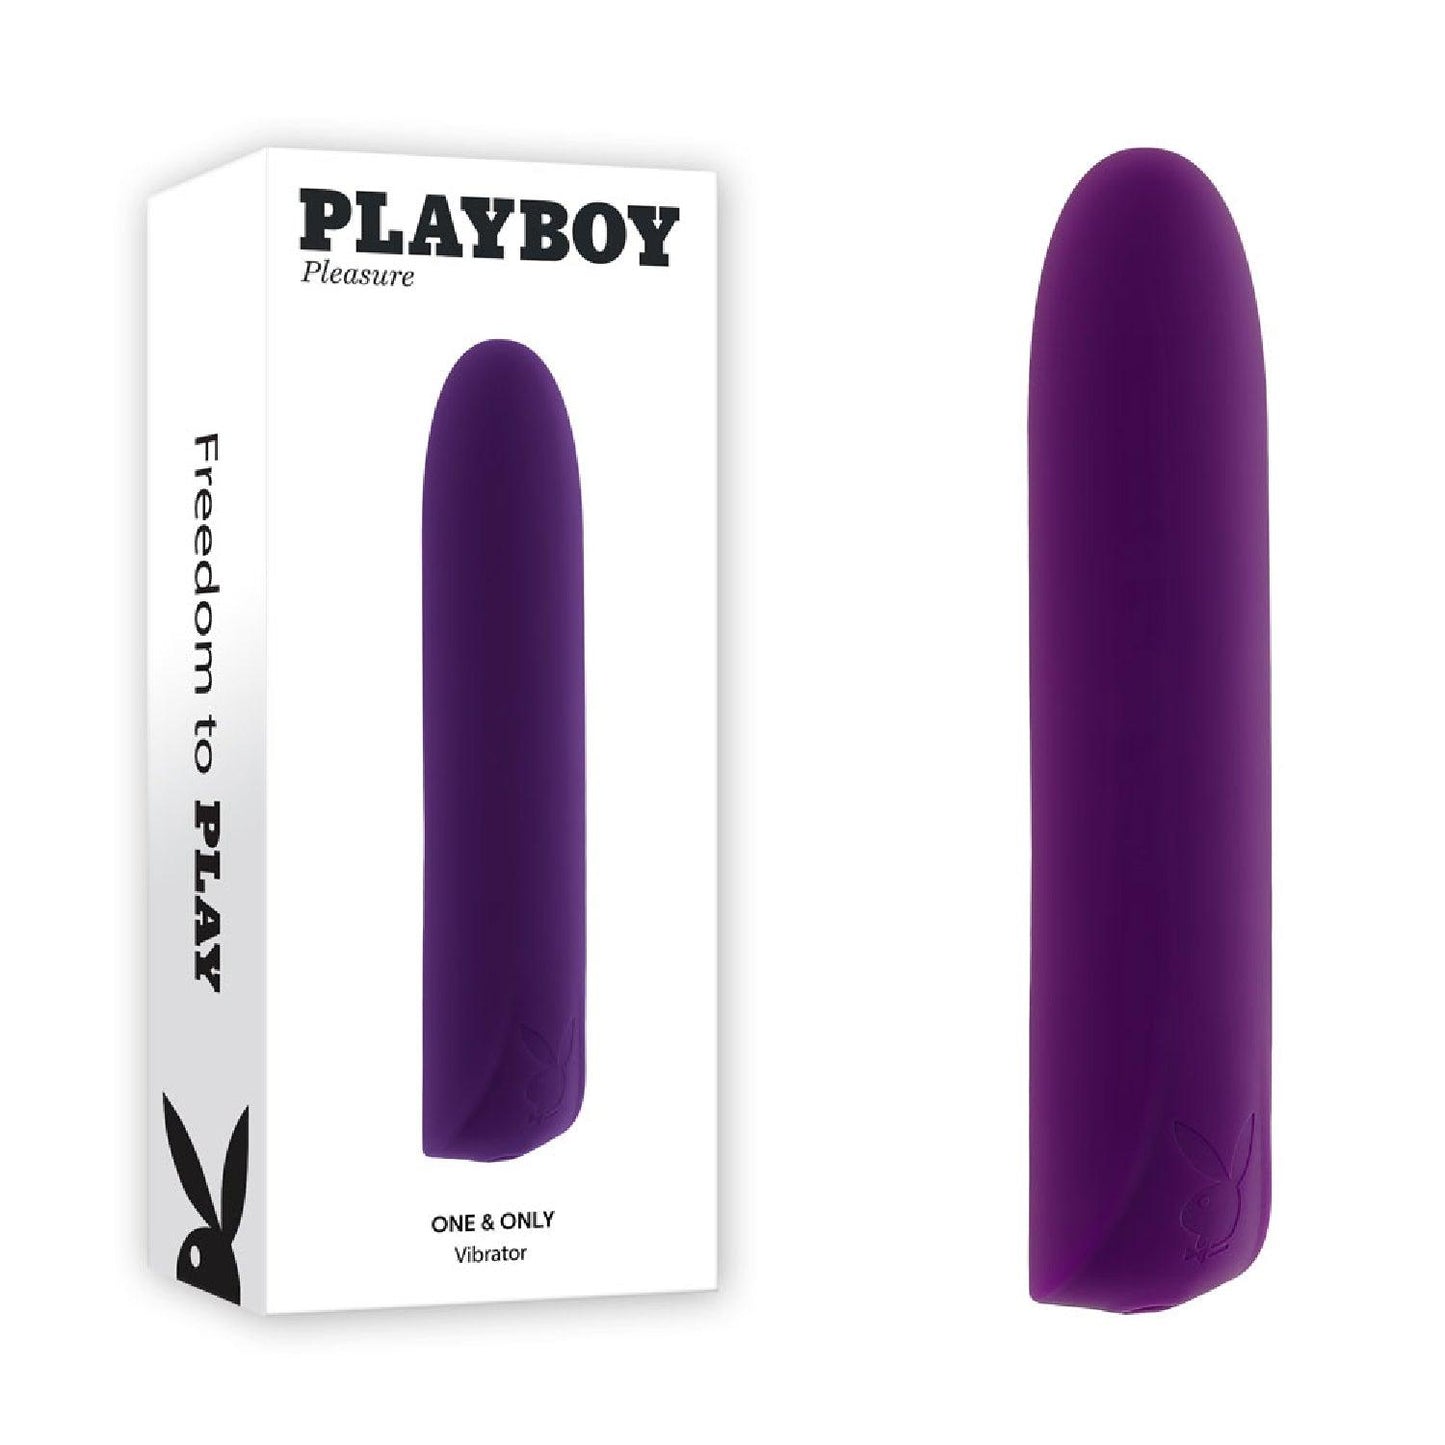 Playboy Pleasure ONE & ONLY - Take A Peek